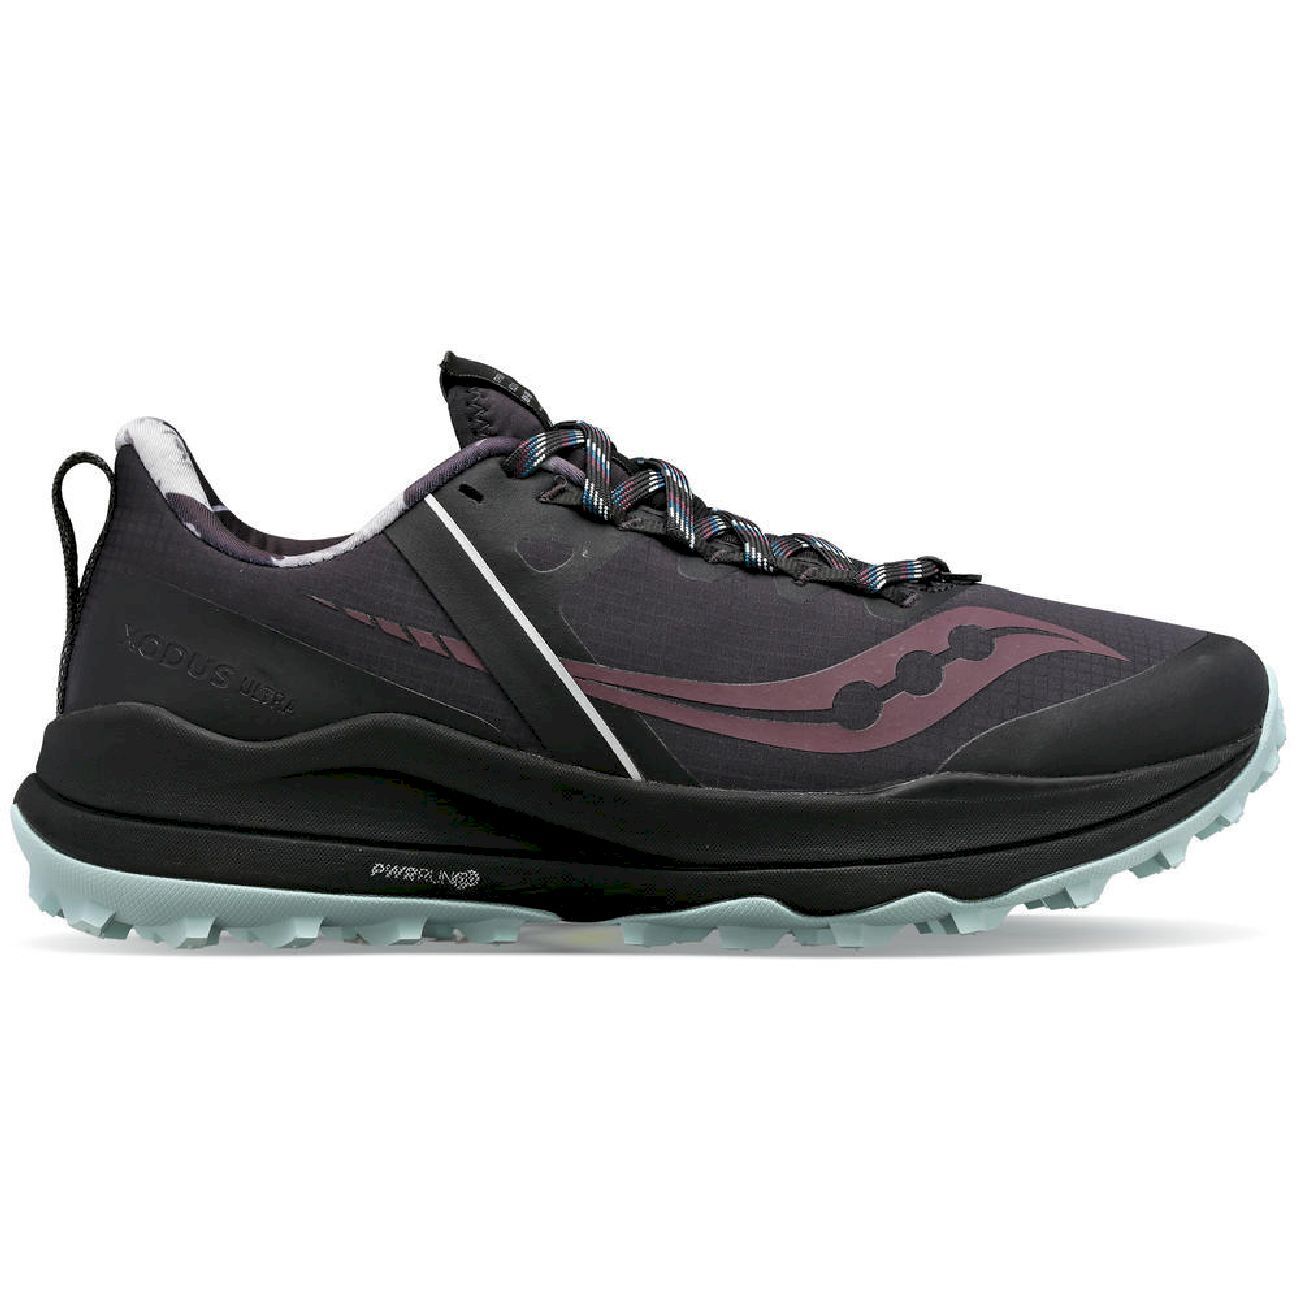 Saucony Xodus Ultra Runshield - Trail running shoes - Men's